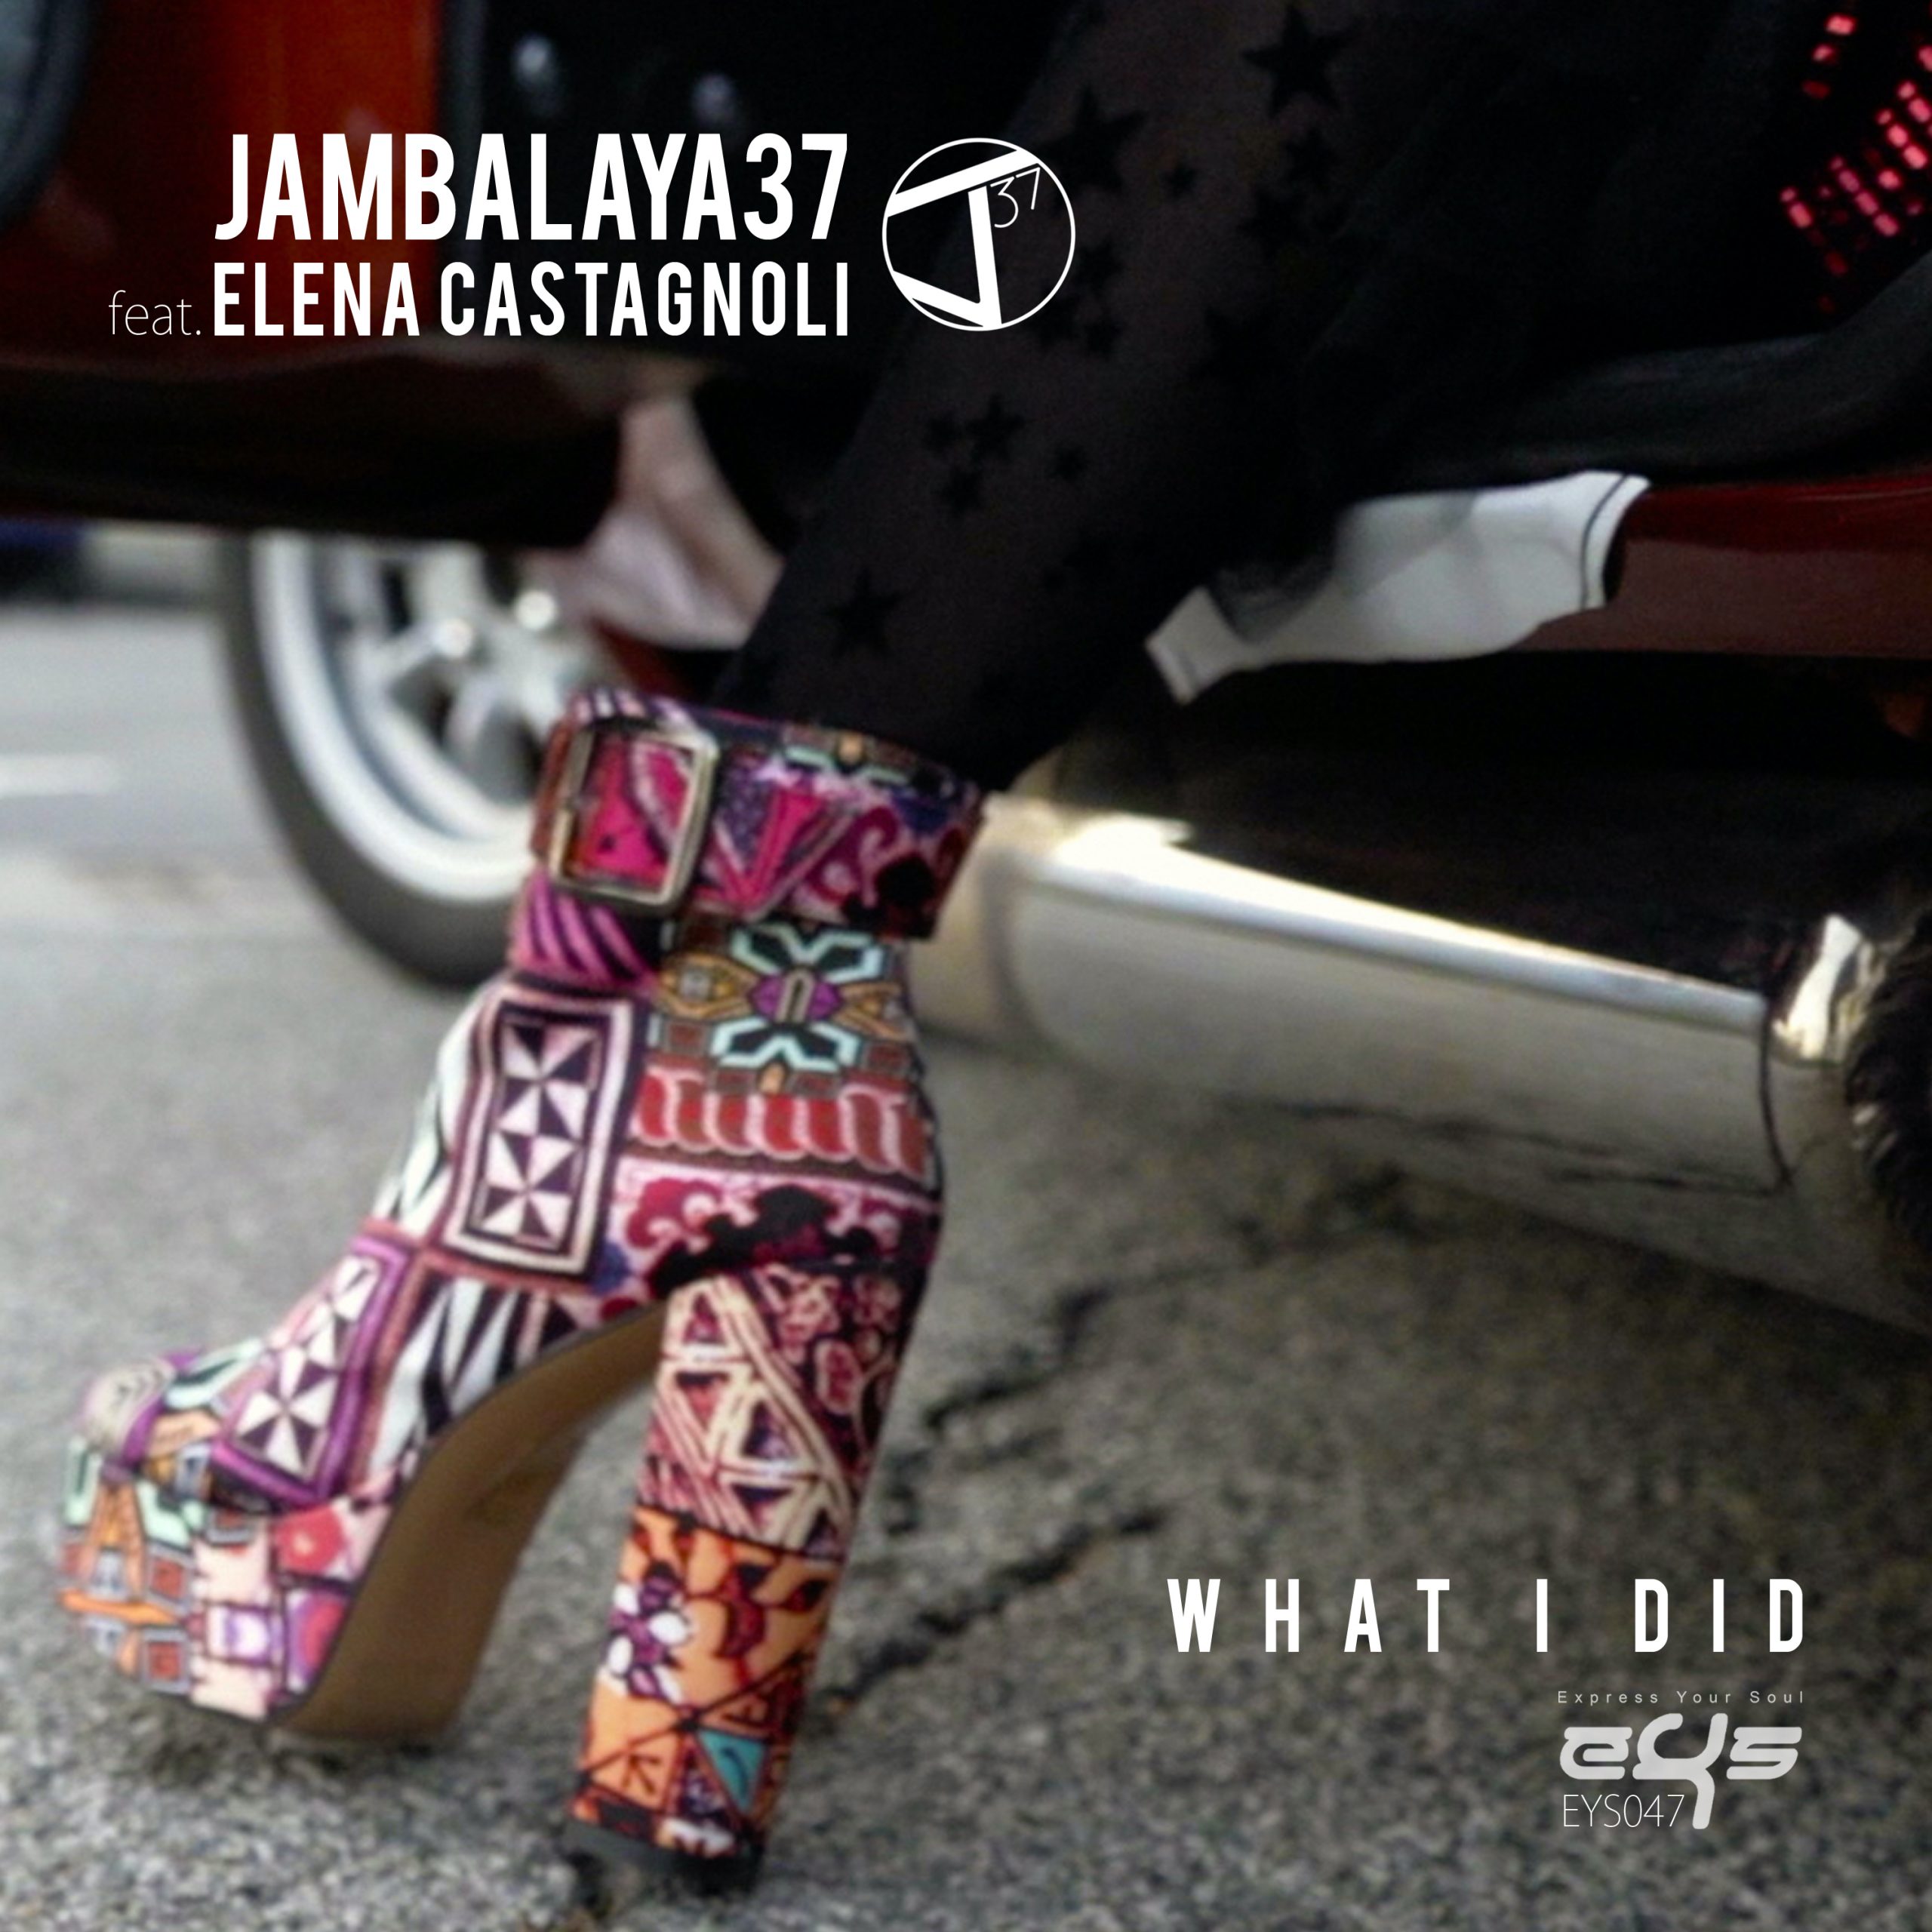 Jambalaya 37 feat. Elena Castagnoli: “What I Did” fuori ora!